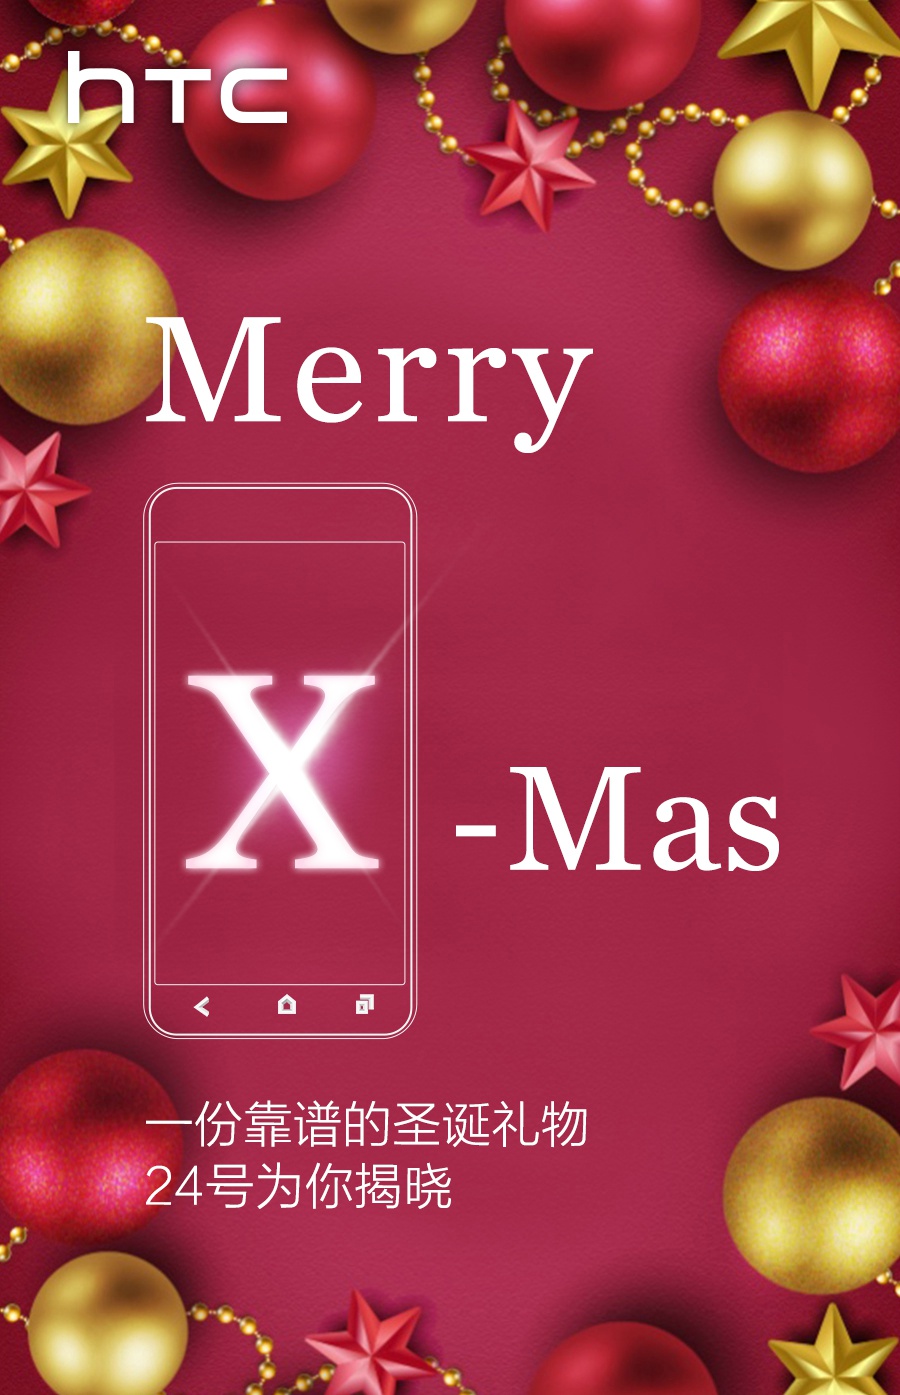 HTC One X9 24 December Release Teaser